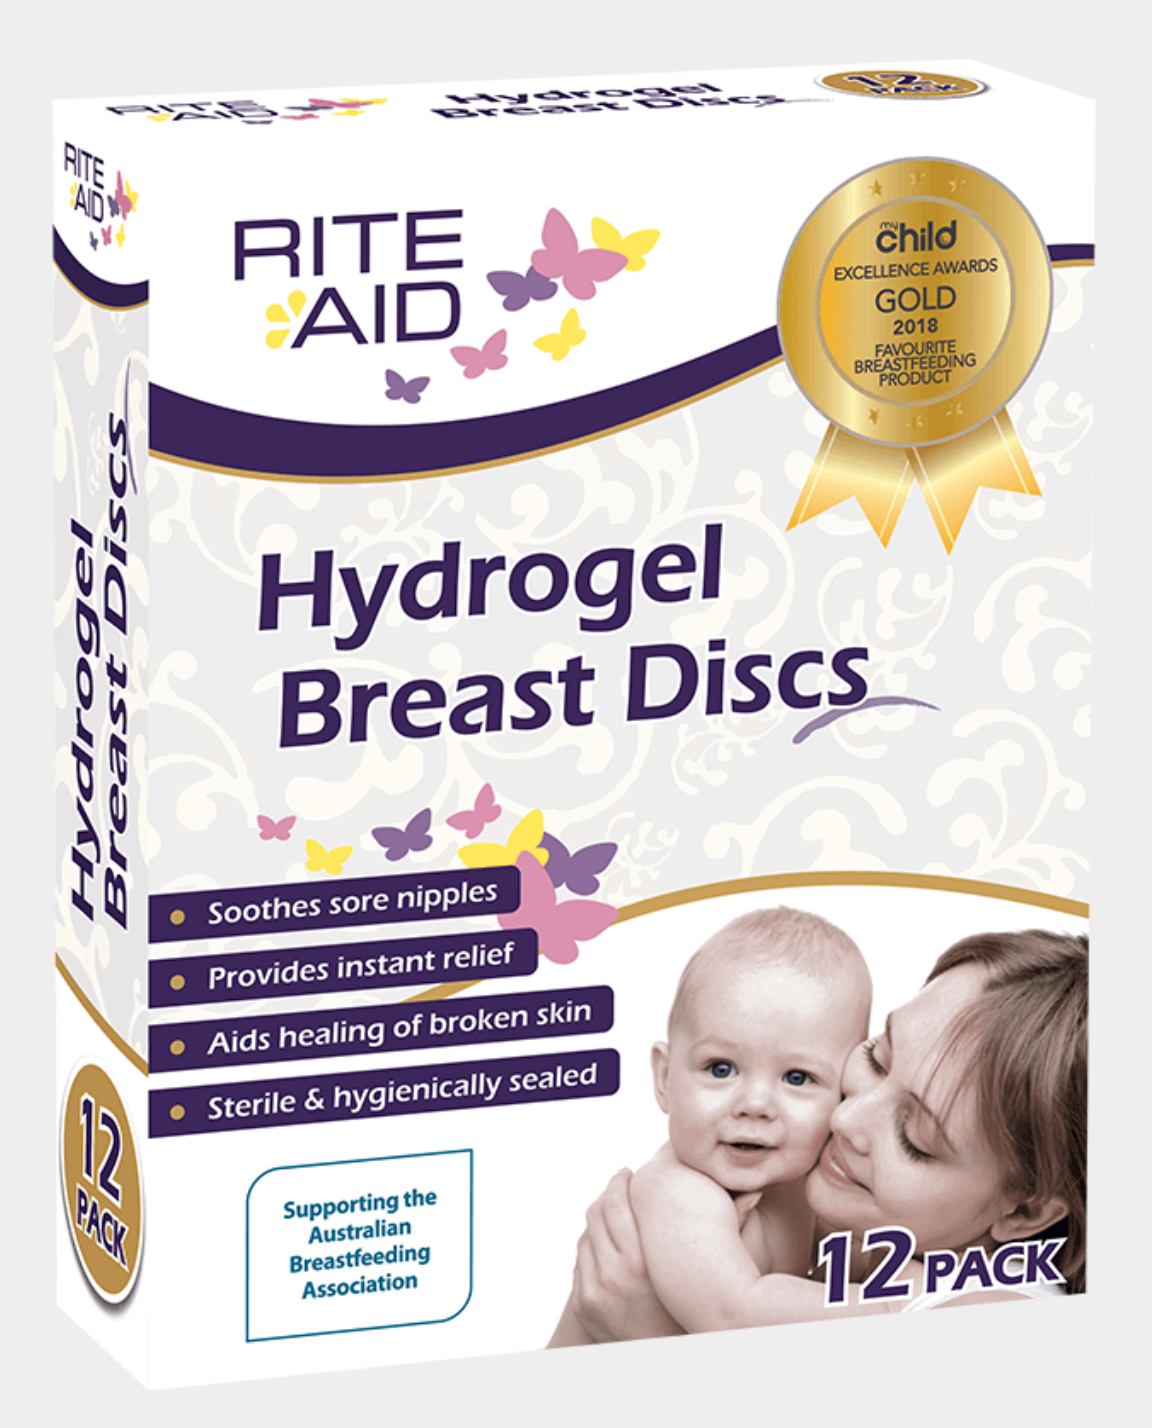 3) Rite Aid Hydrogel Breast Discs